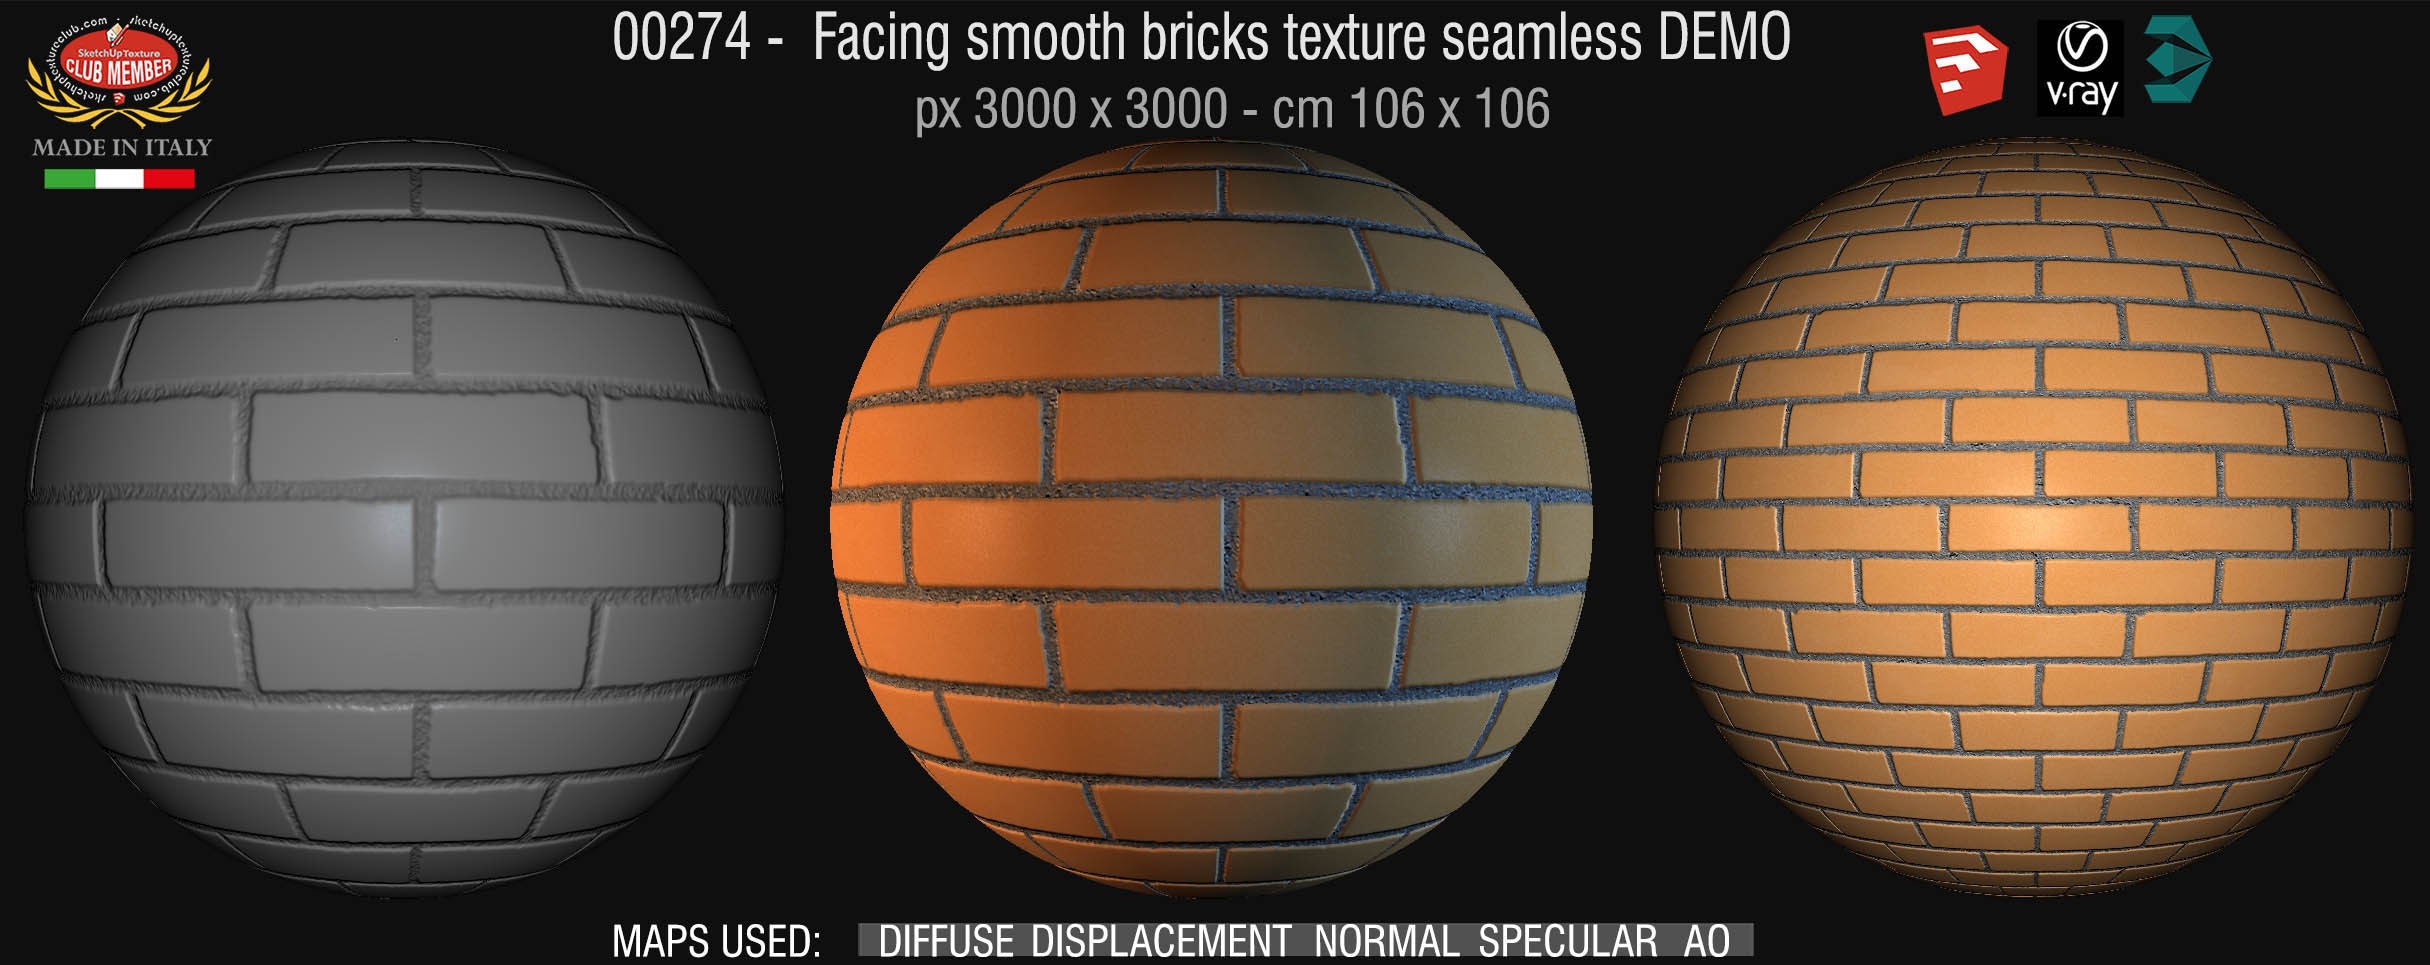 00274 Facing smooth bricks texture seamless + maps DEMO